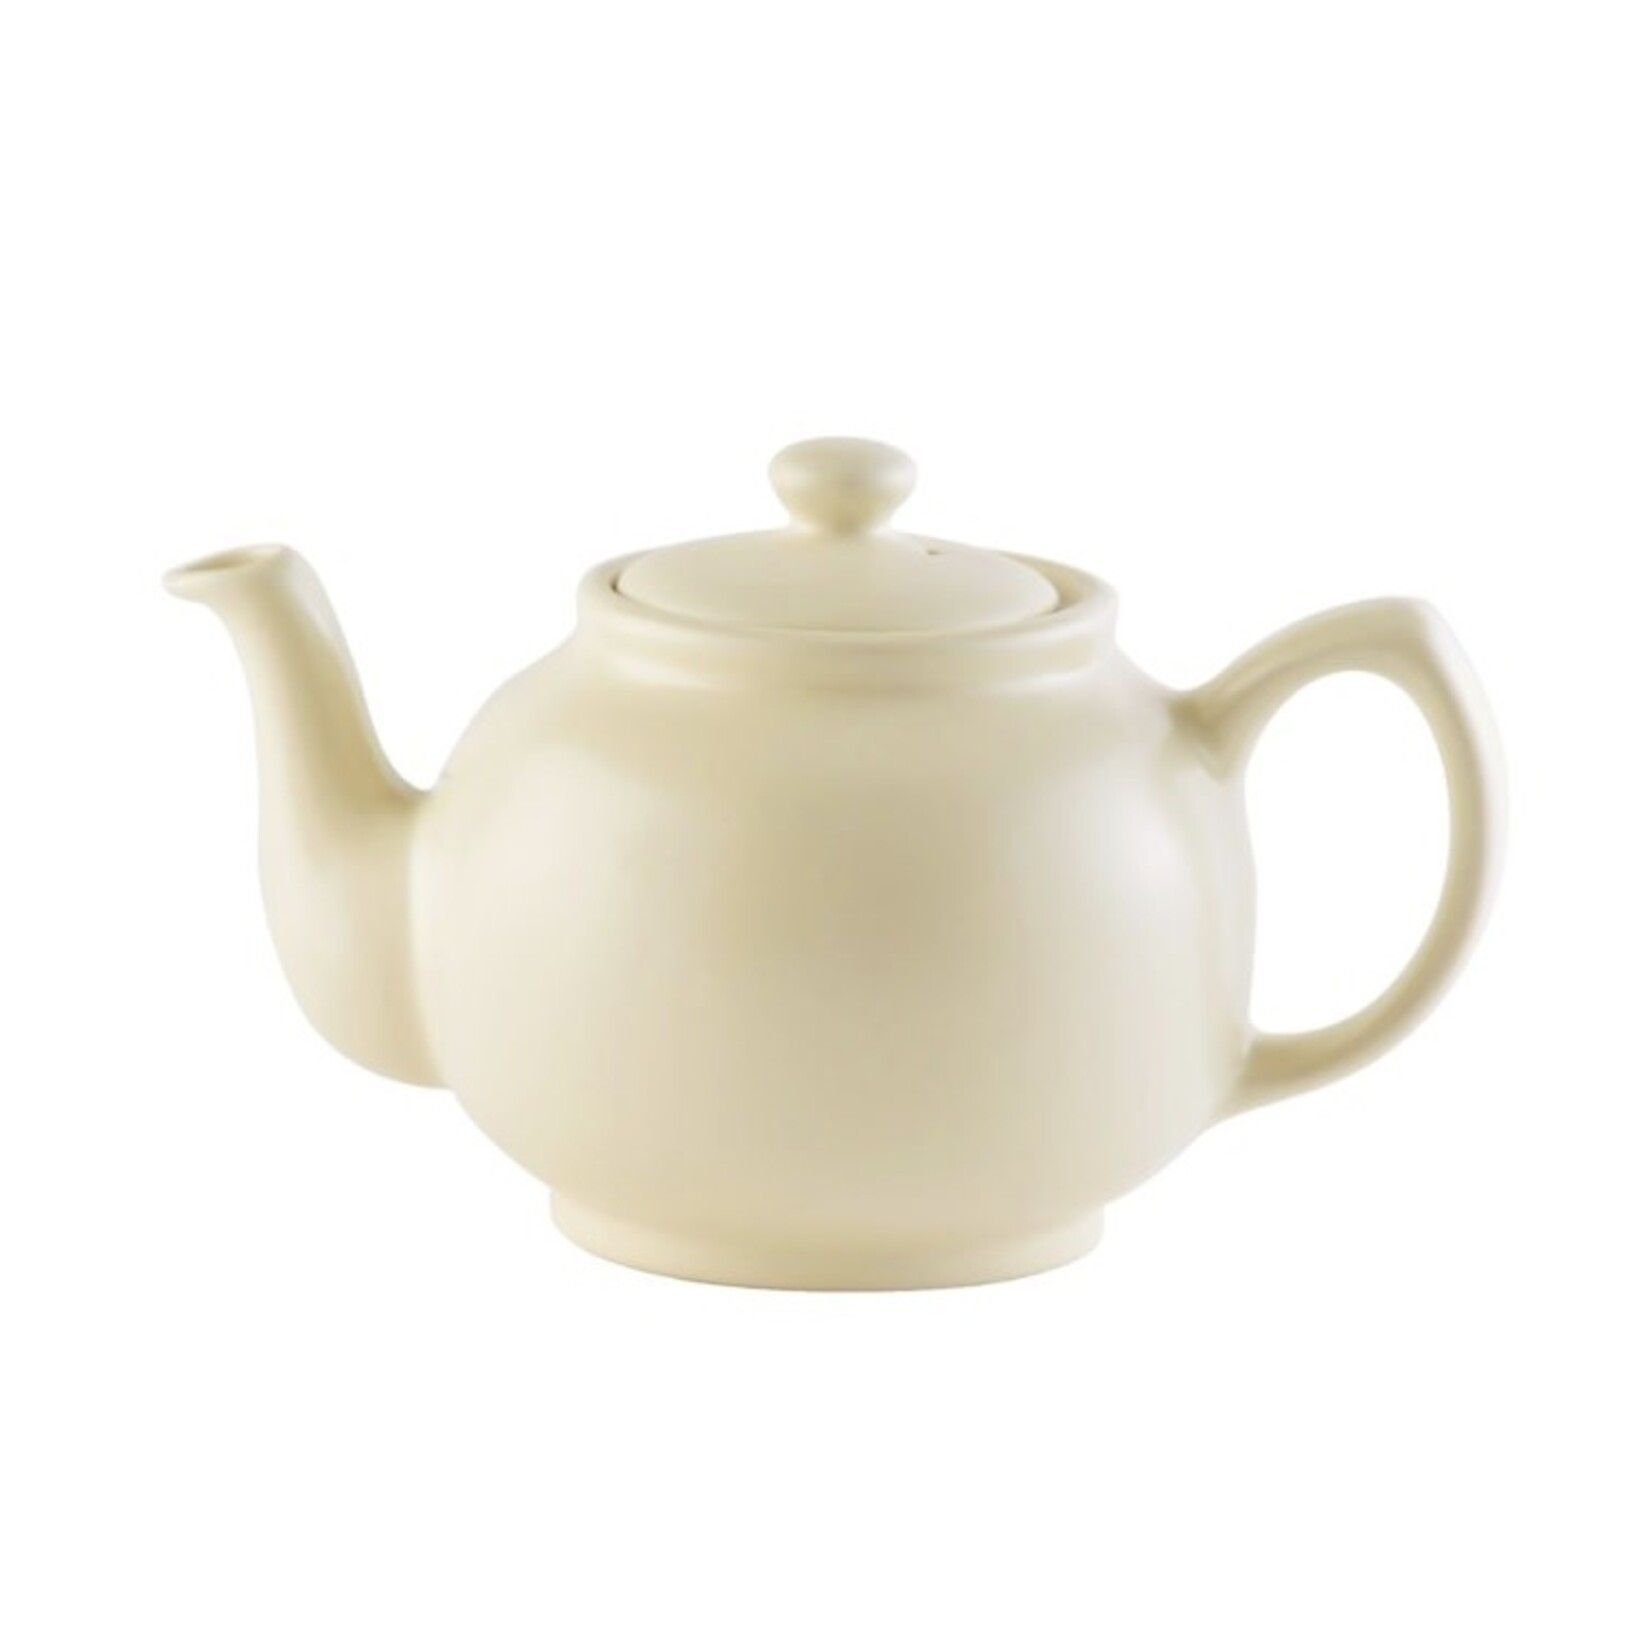 PRICE & KENSINGTON PRICE & KENSINGTON Matte Teapot 2 Cup - Cream